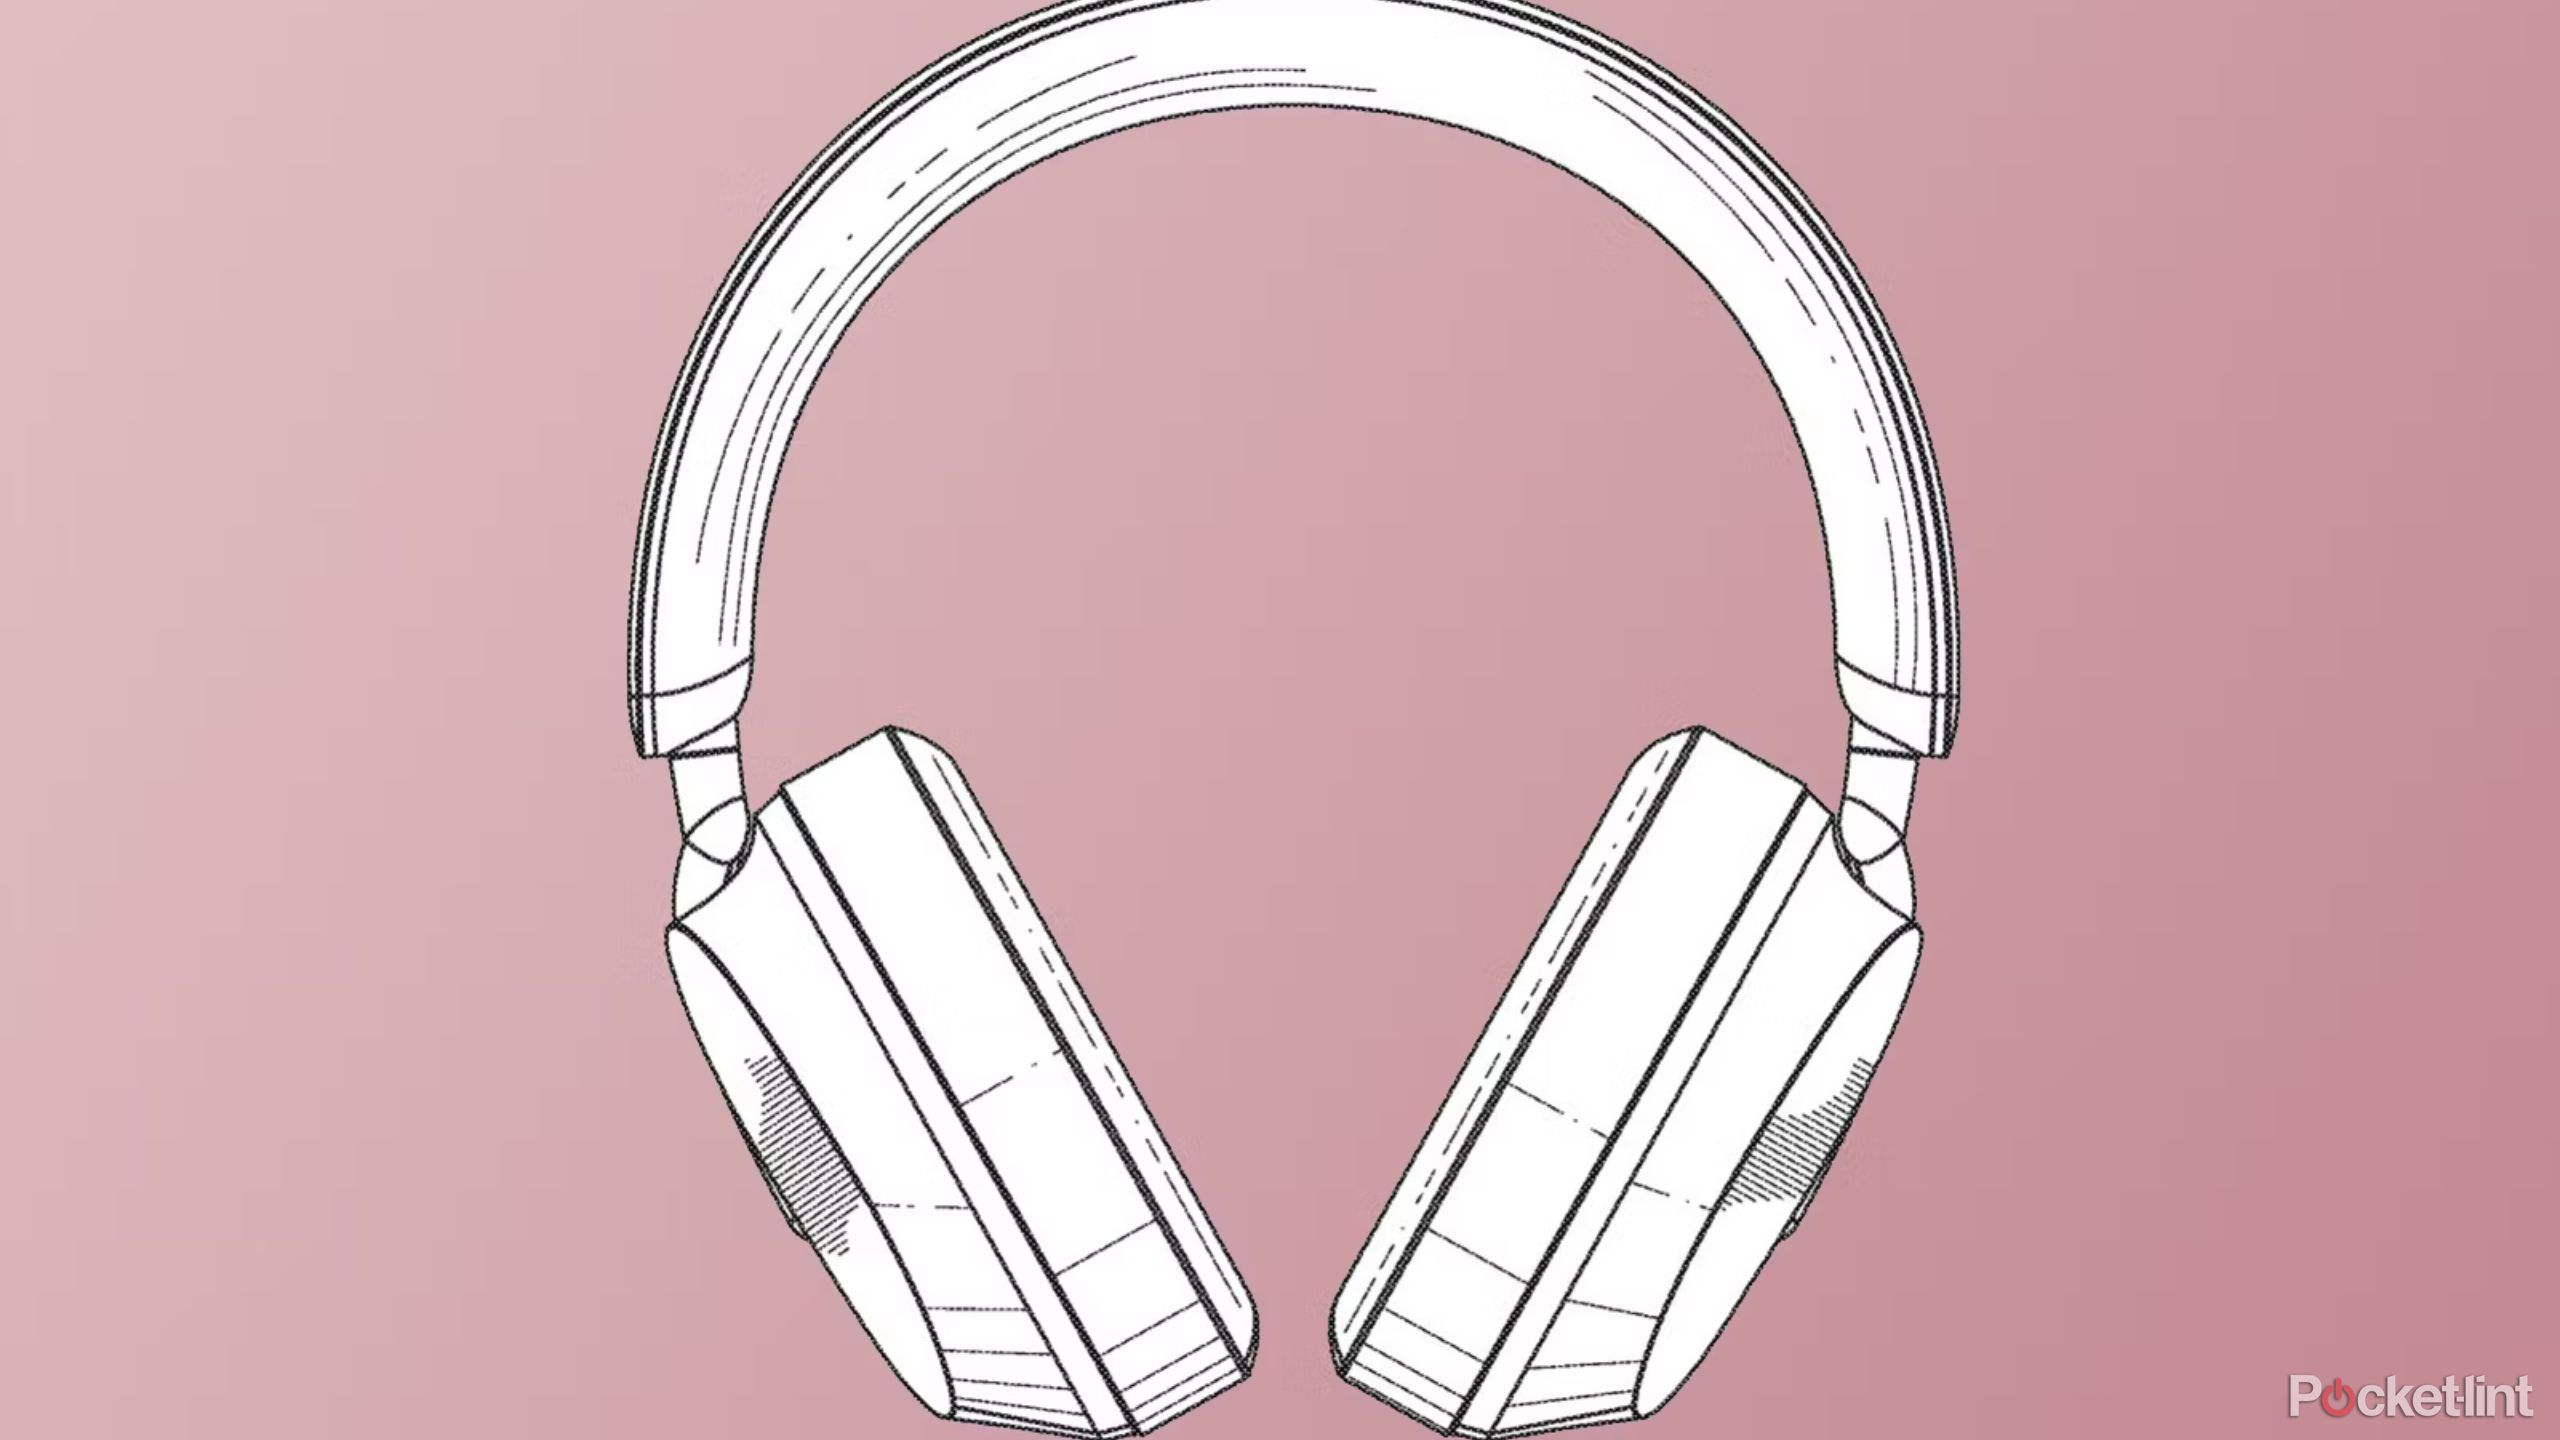 Sonos headphones patent presents potential design and features photo 4